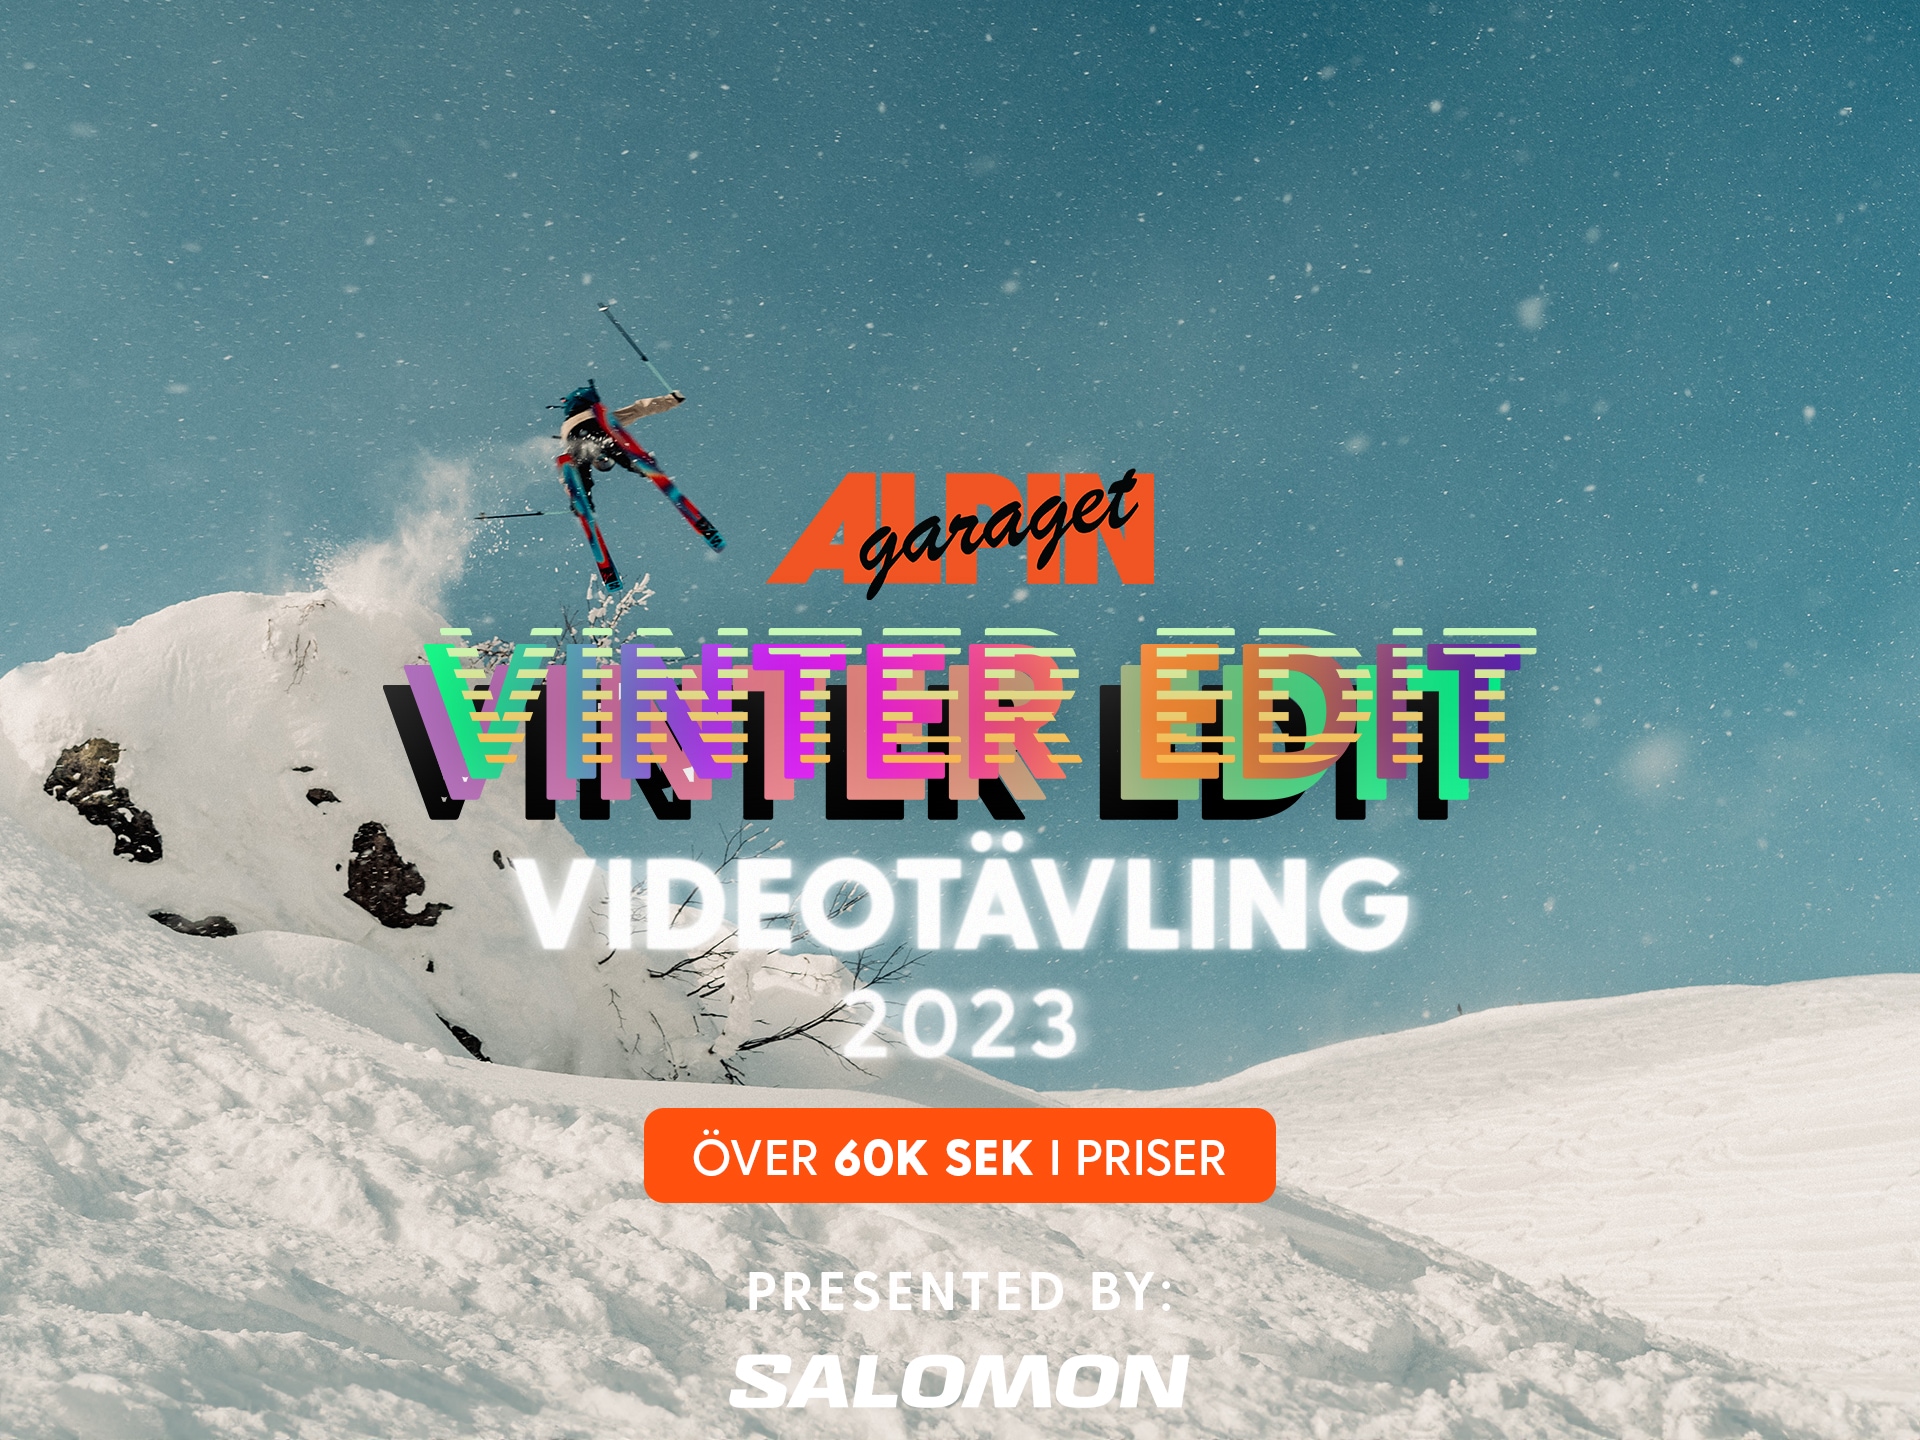 AG "Vinter Edit" Video Tävling 2023